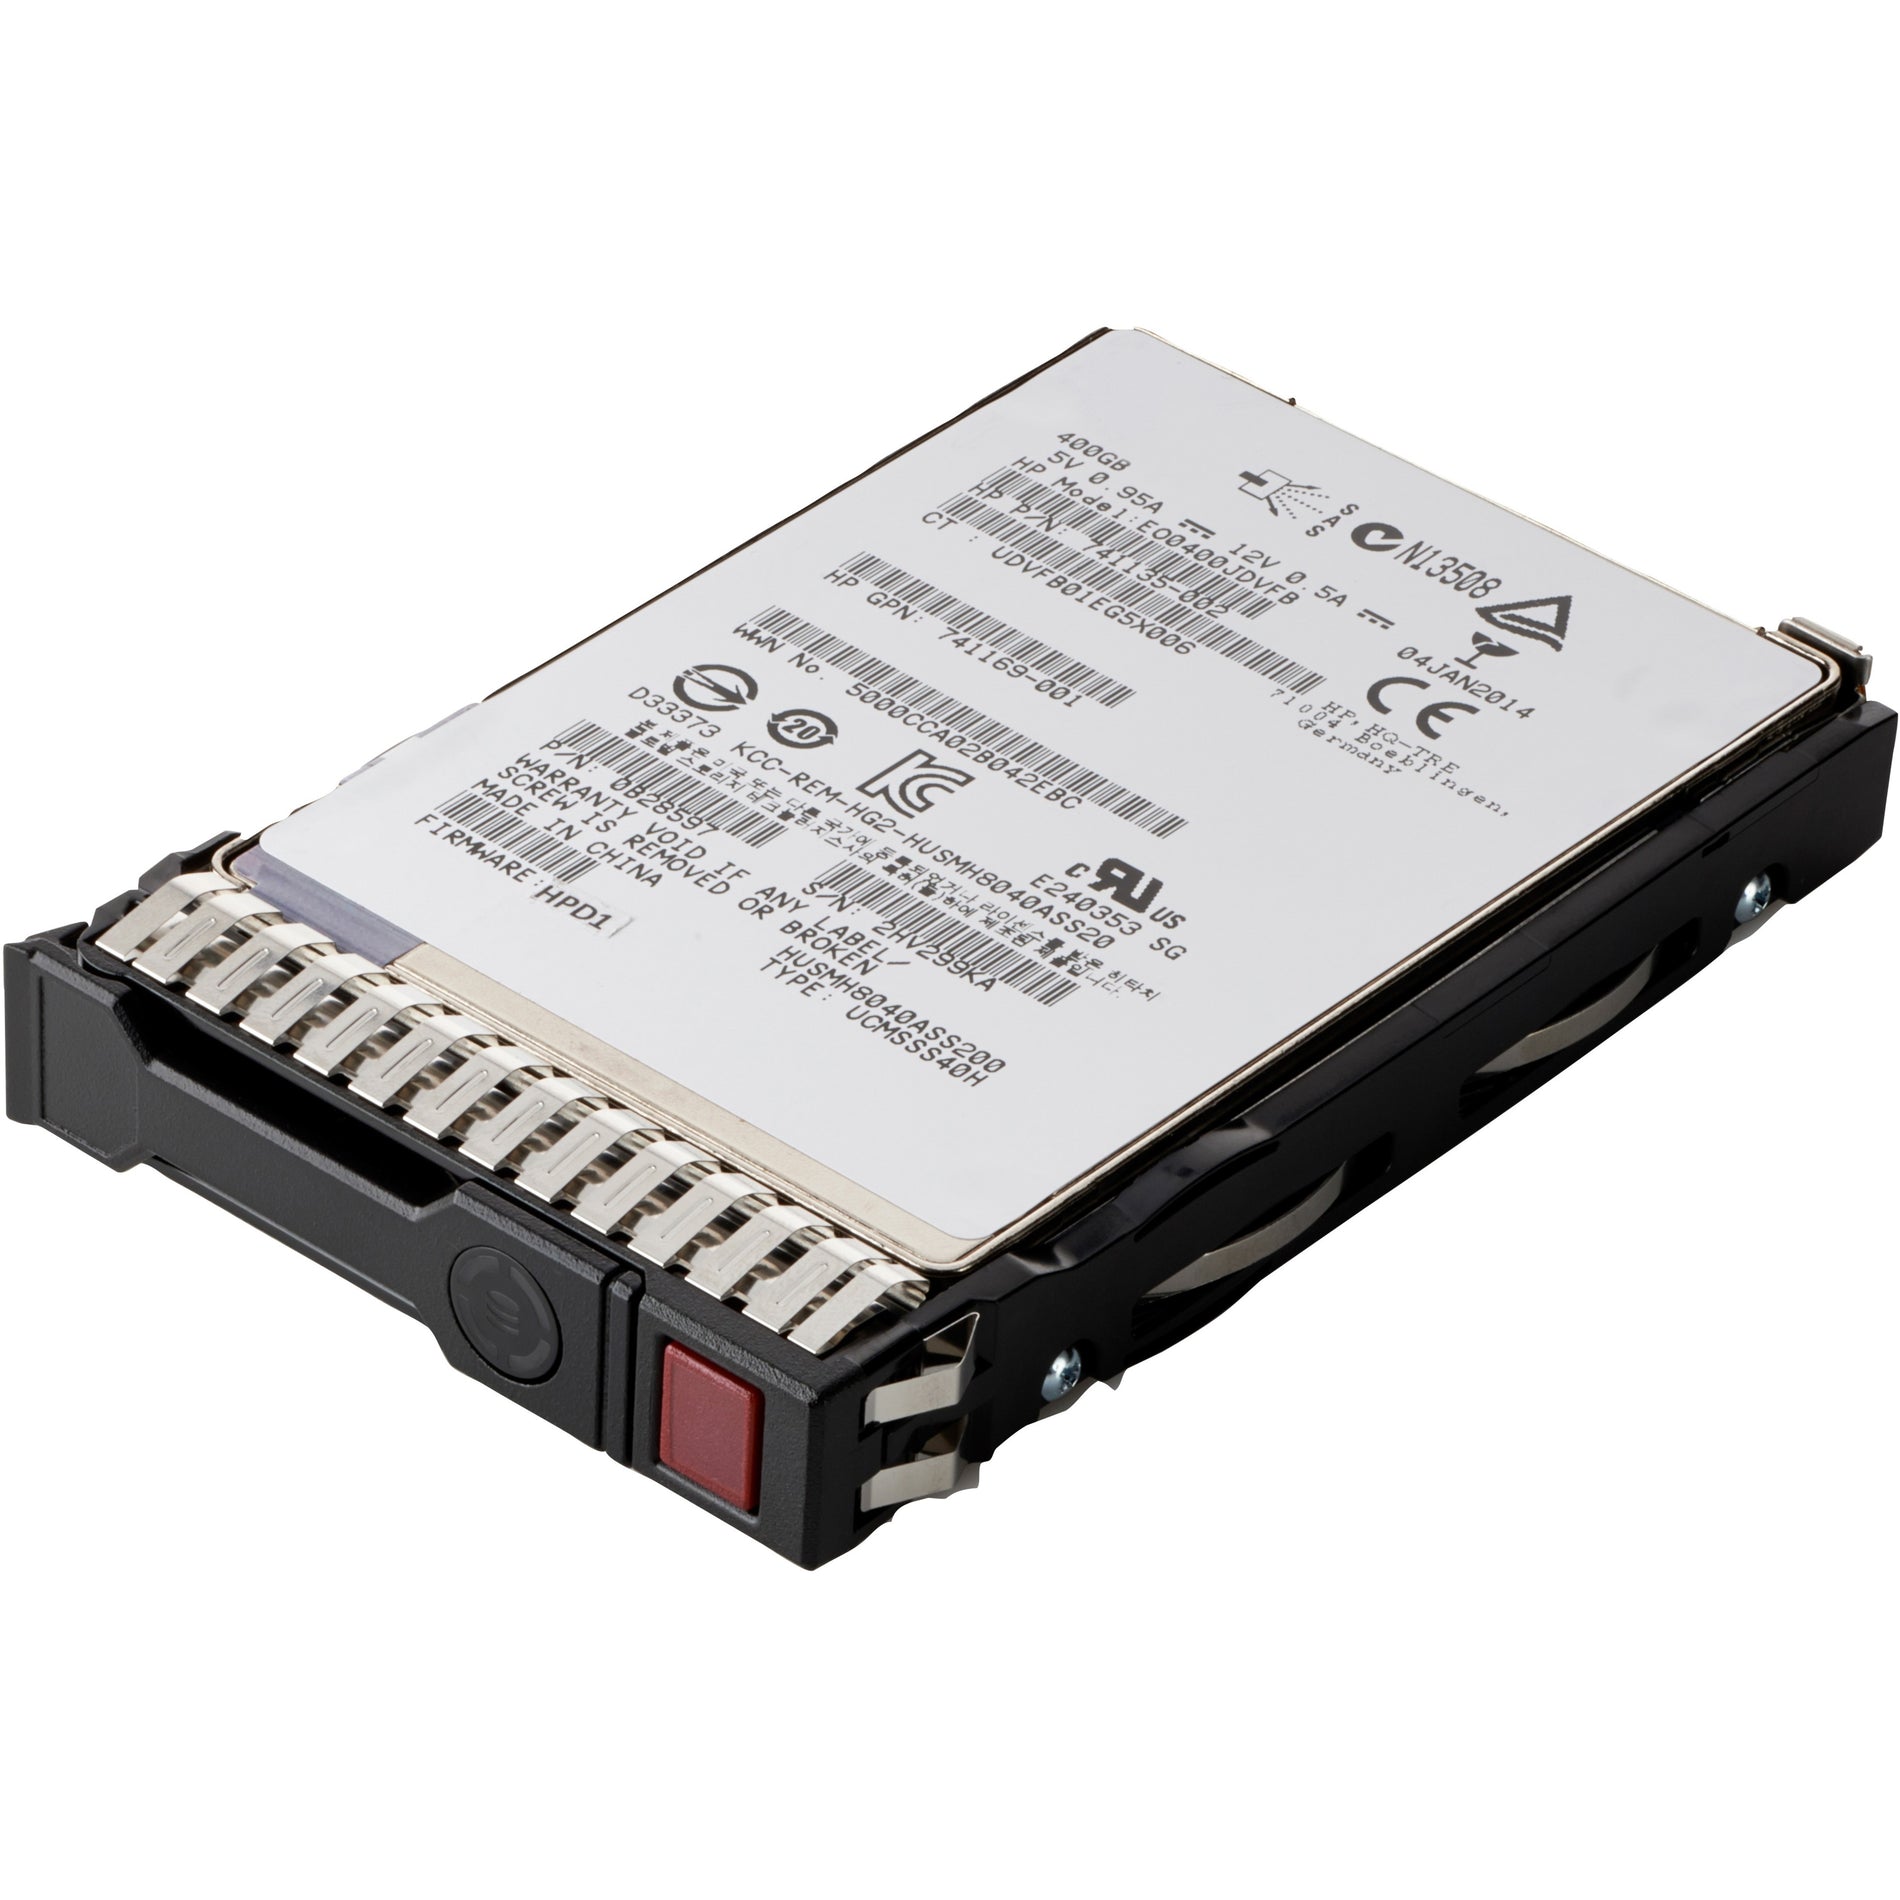 HPE P04556-B21 Solid State Drive - 240 GB SATA Internal, High Performance Storage